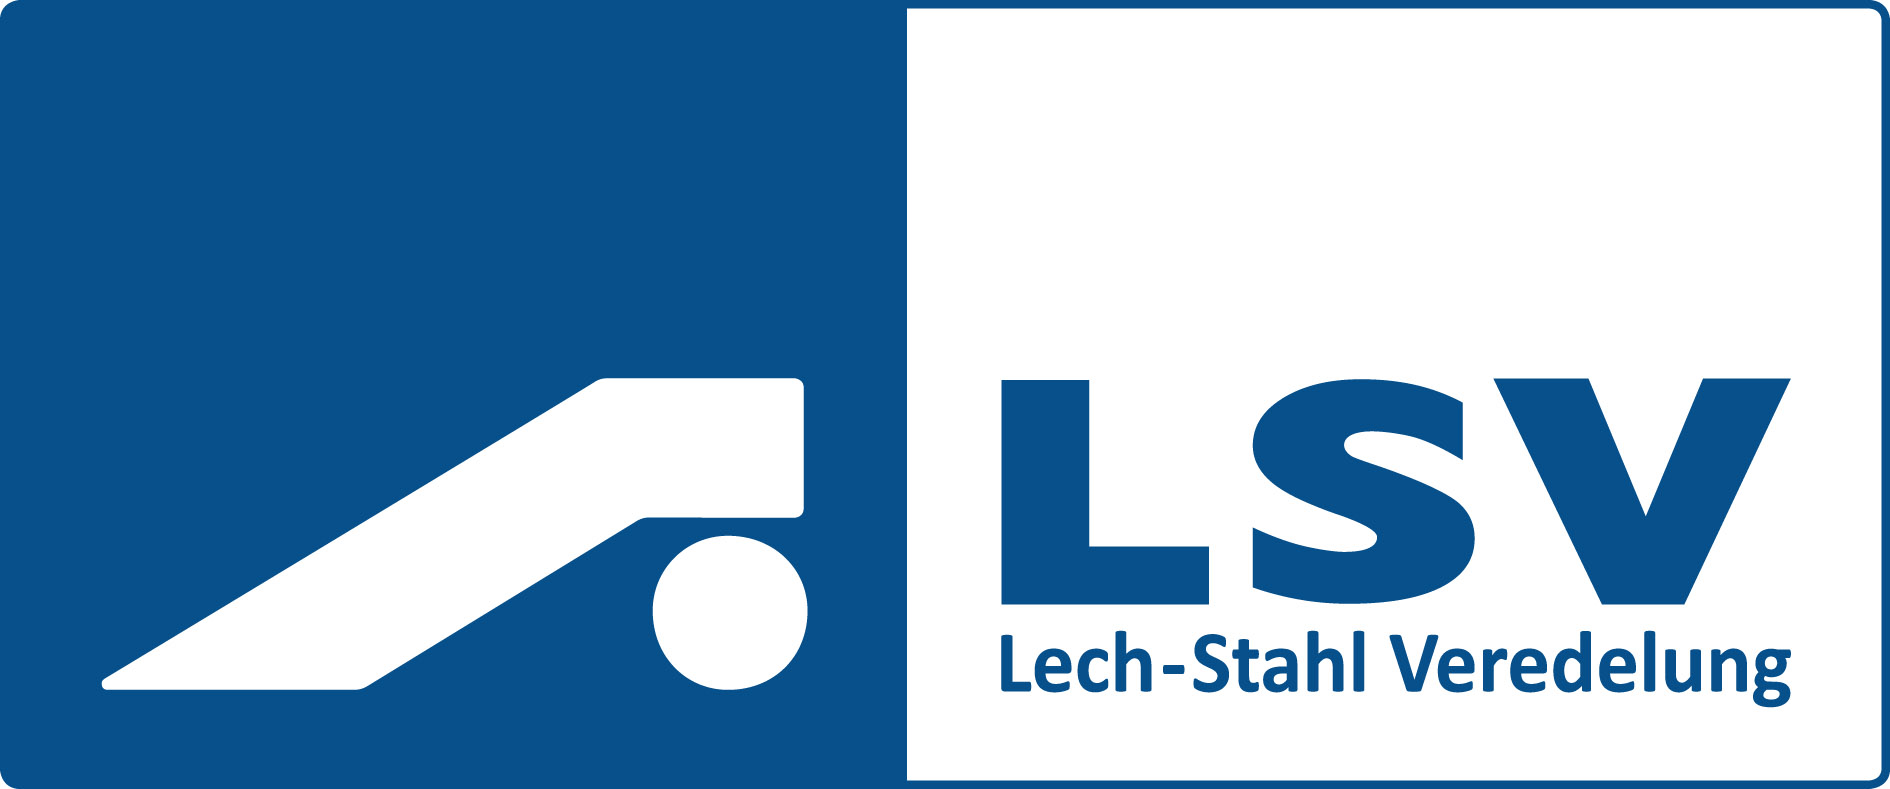 Lech Stahlveredelung GmbH